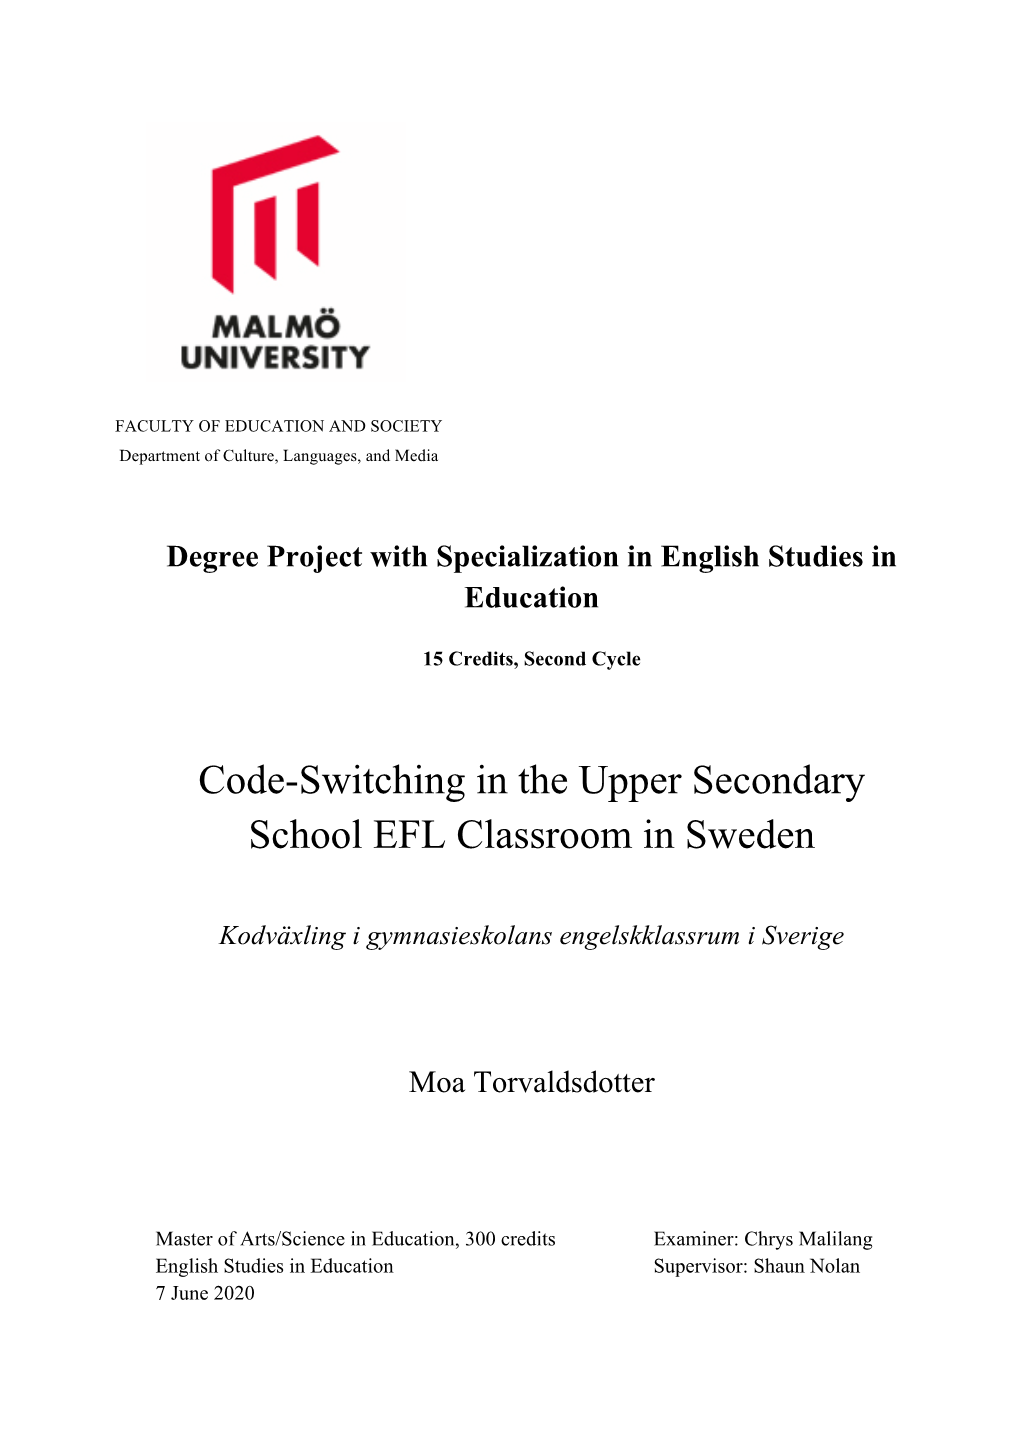 Code-Switching in the Upper Secondary School EFL Classroom in Sweden